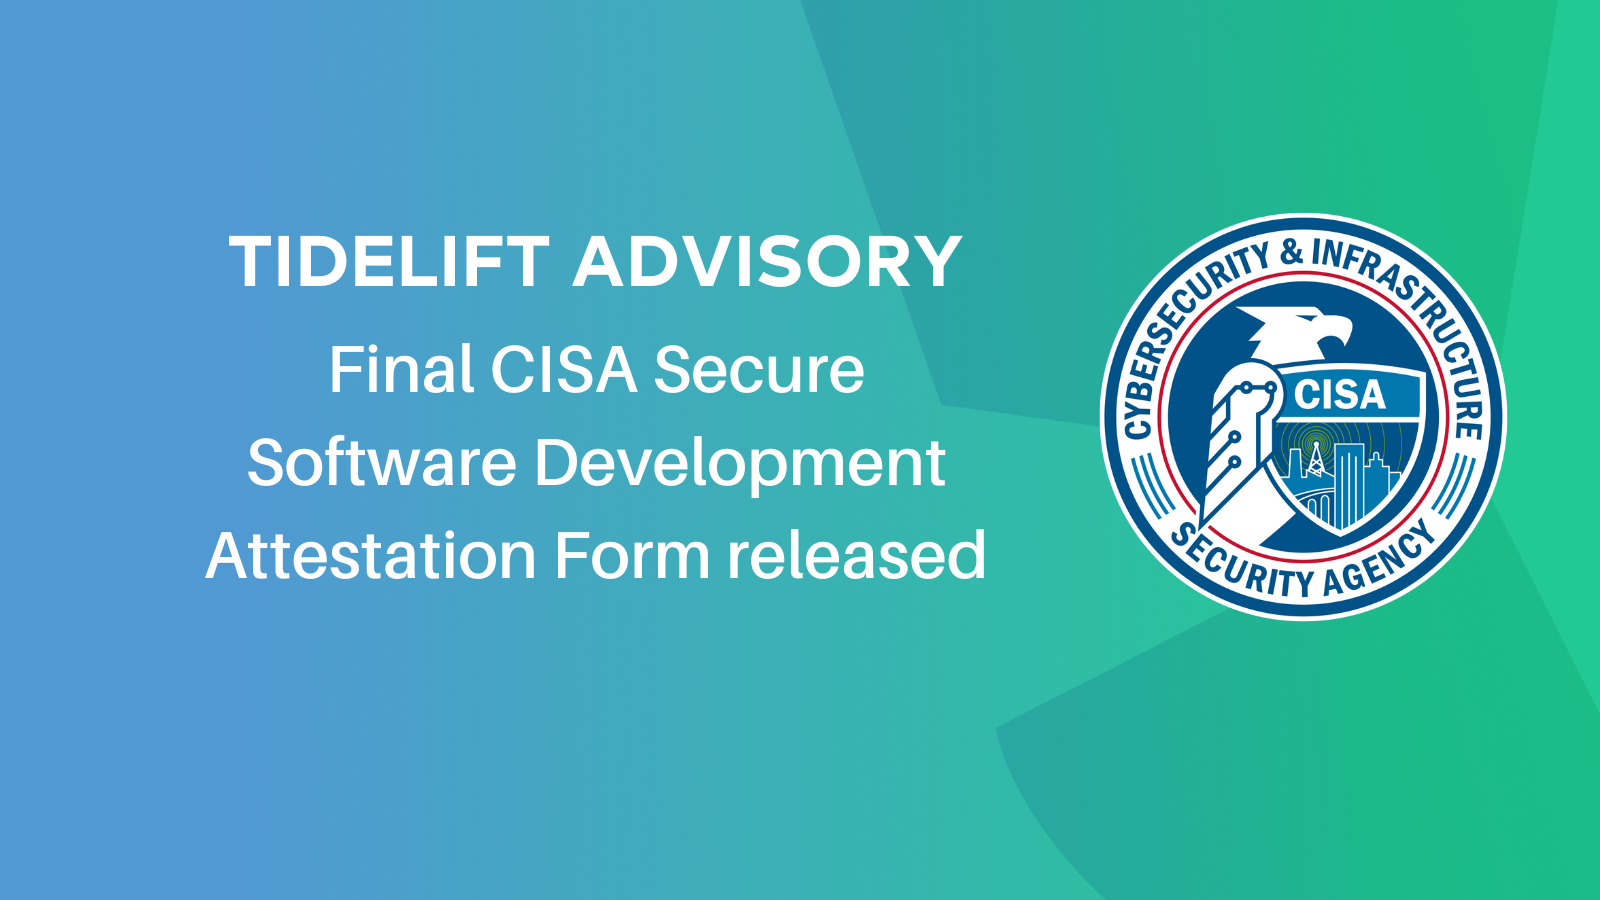 Tidelift advisory: Final CISA Secure Software Development Attestation Form released